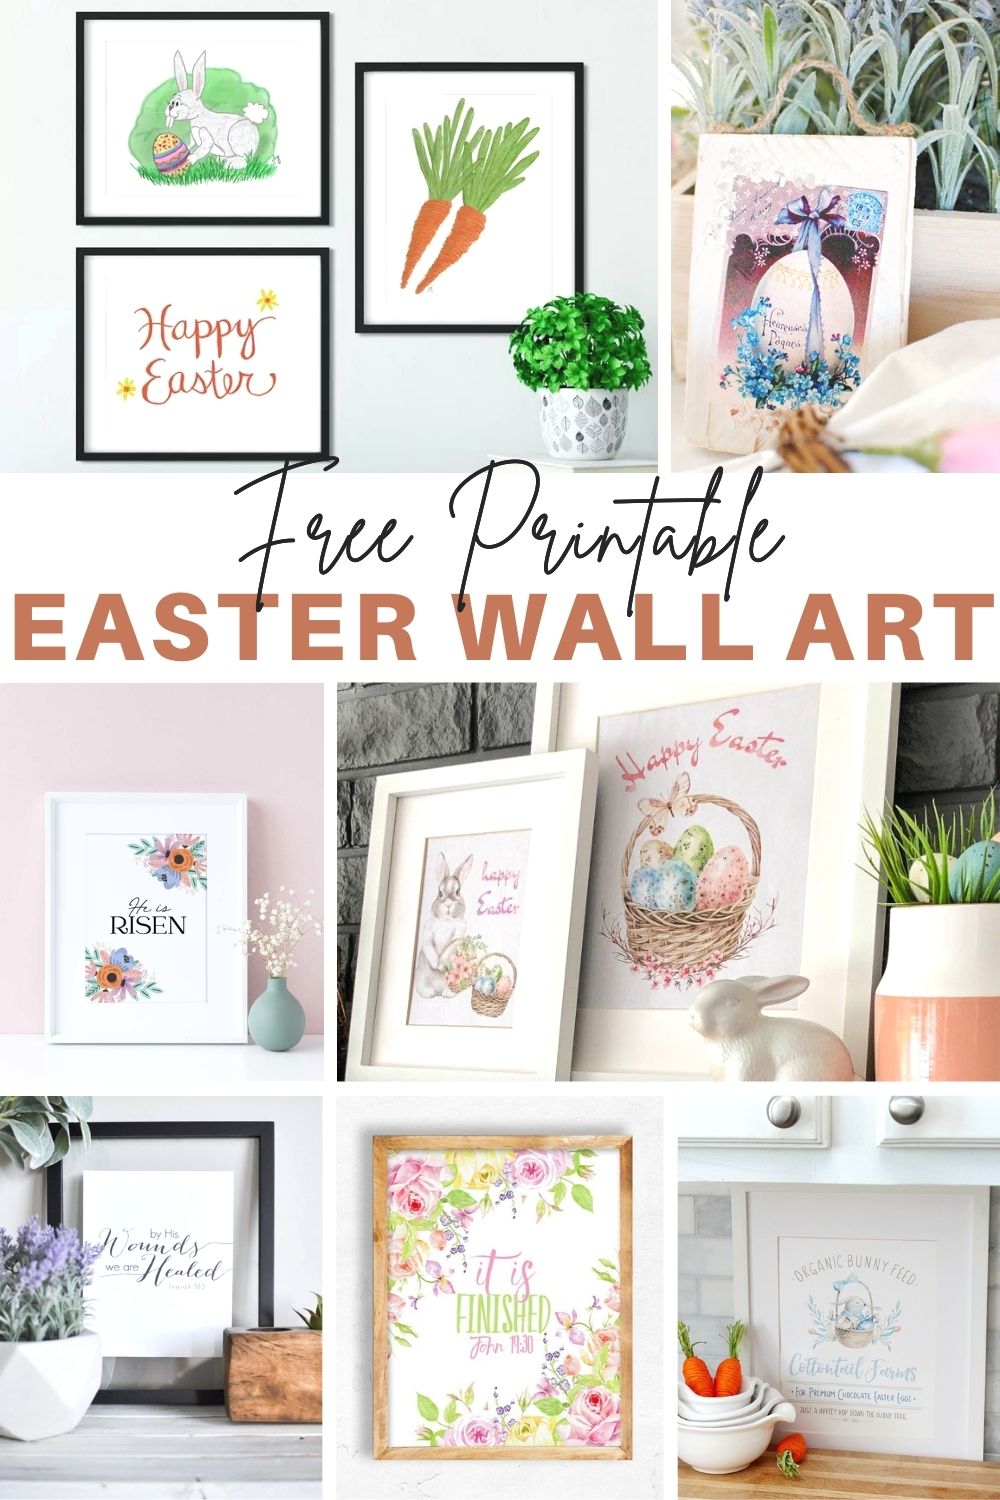 FREE printable Easter wall art